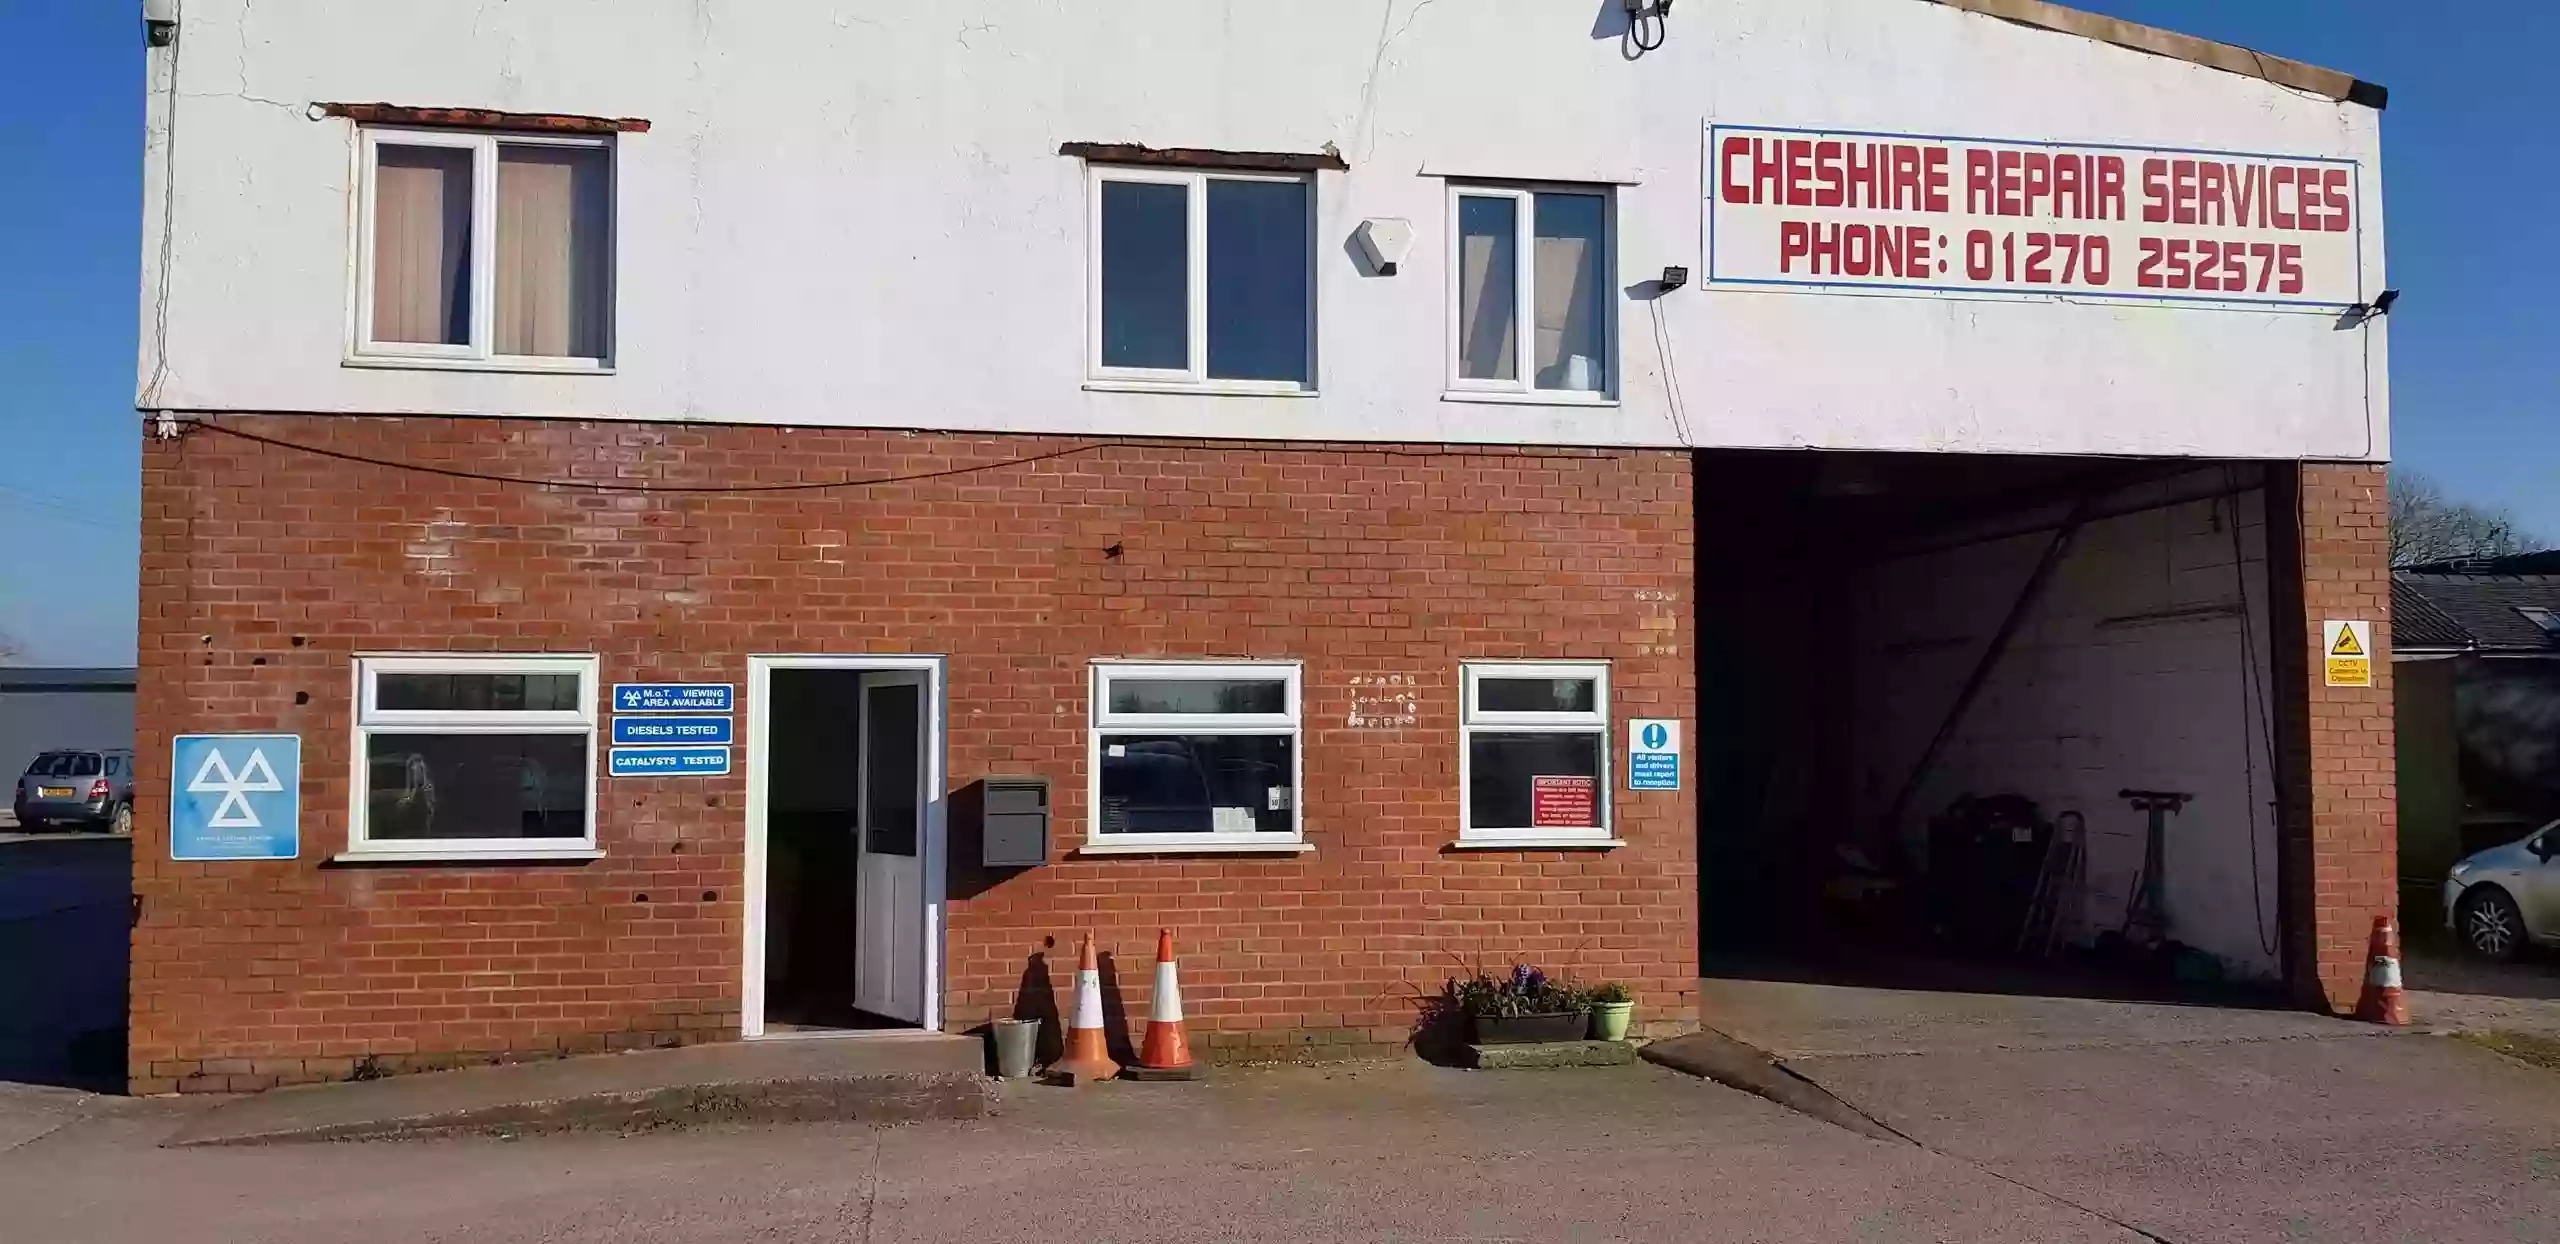 Cheshire Repair Services